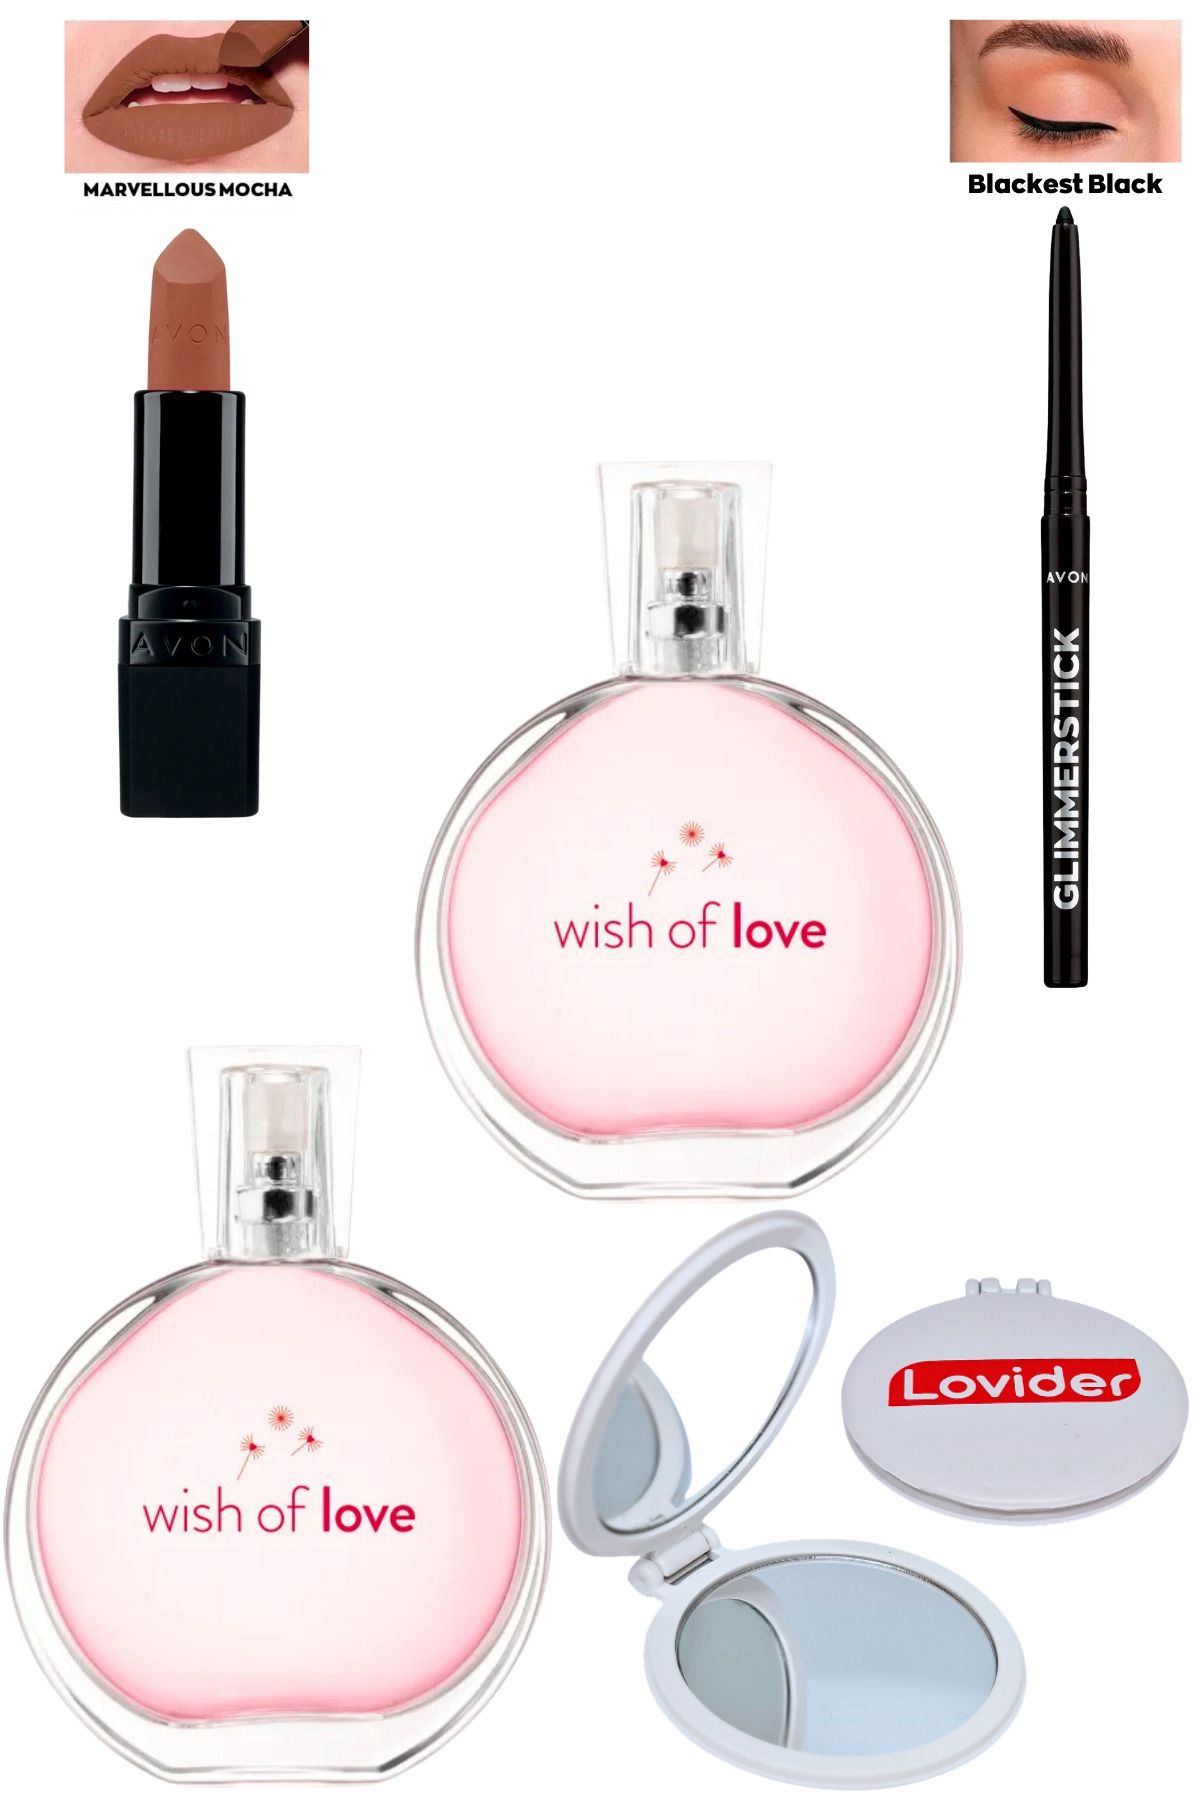 Avon Wish Of Love Kadın Parfüm 50 ml x 2 Adet Marvellous Mocha Ruj Siyah Göz Kalemi Lovider Cep Ayna